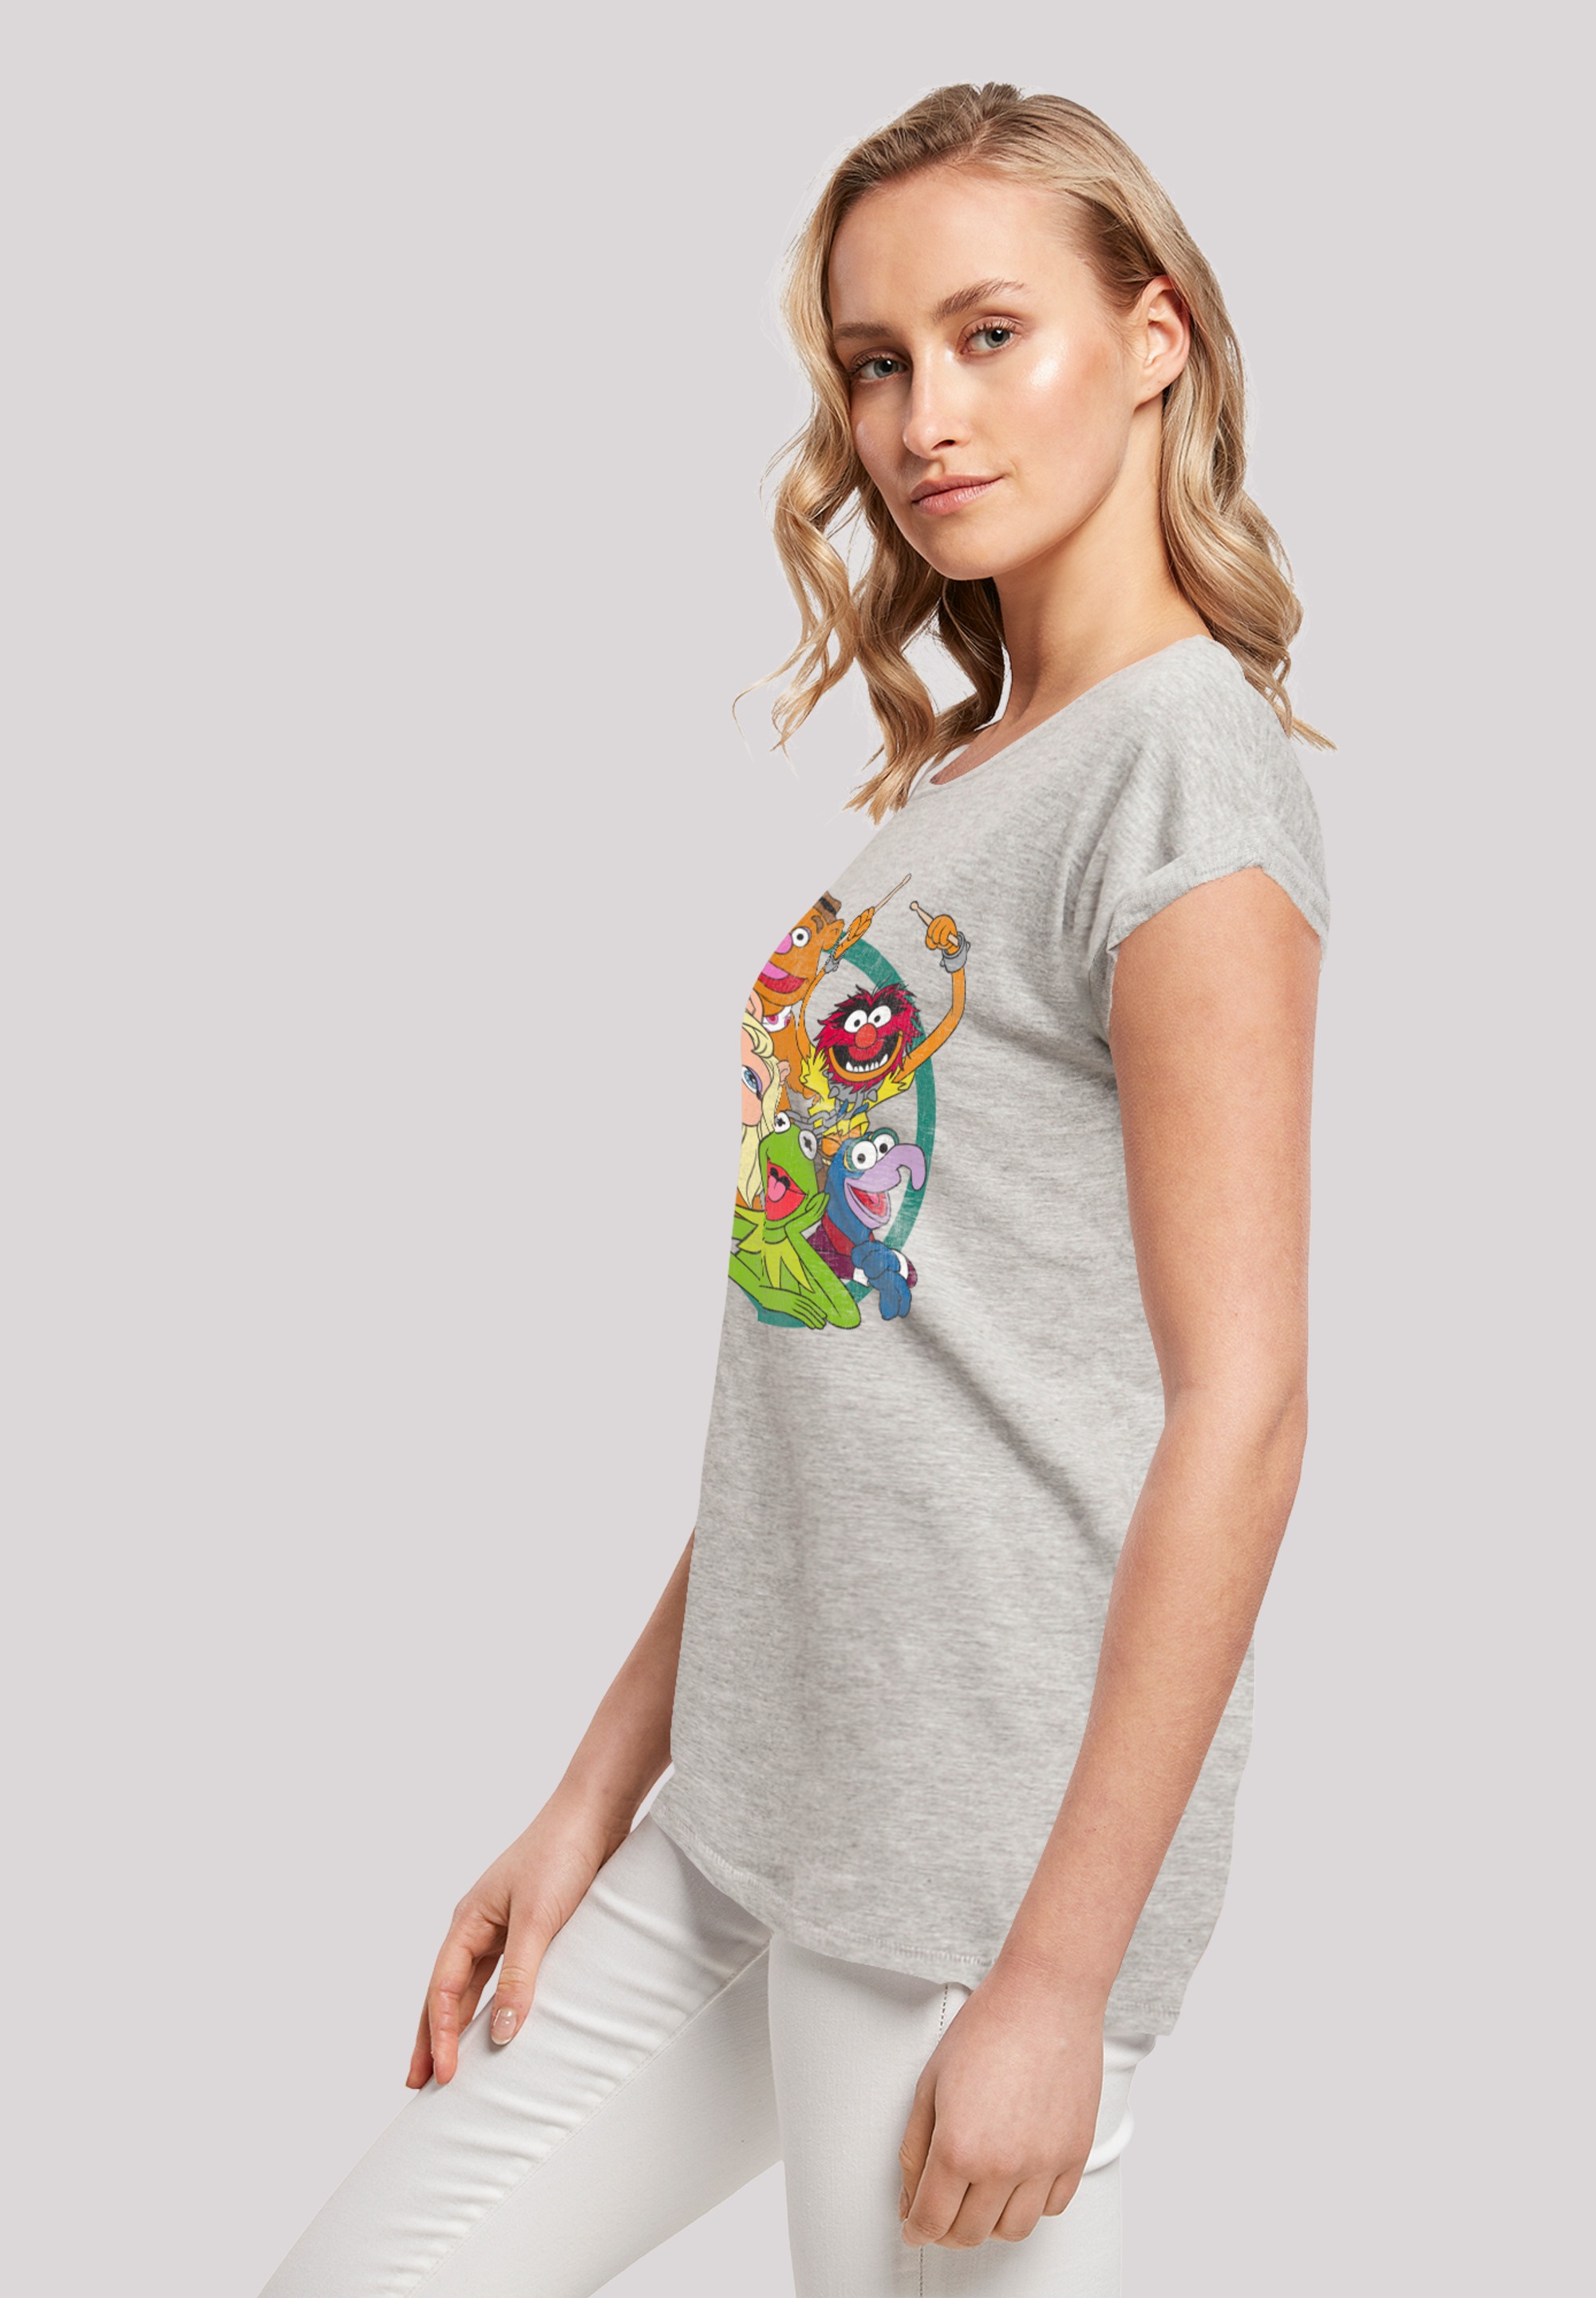 Die Muppets Group F4NT4STIC online »Disney Print T-Shirt Circle«,